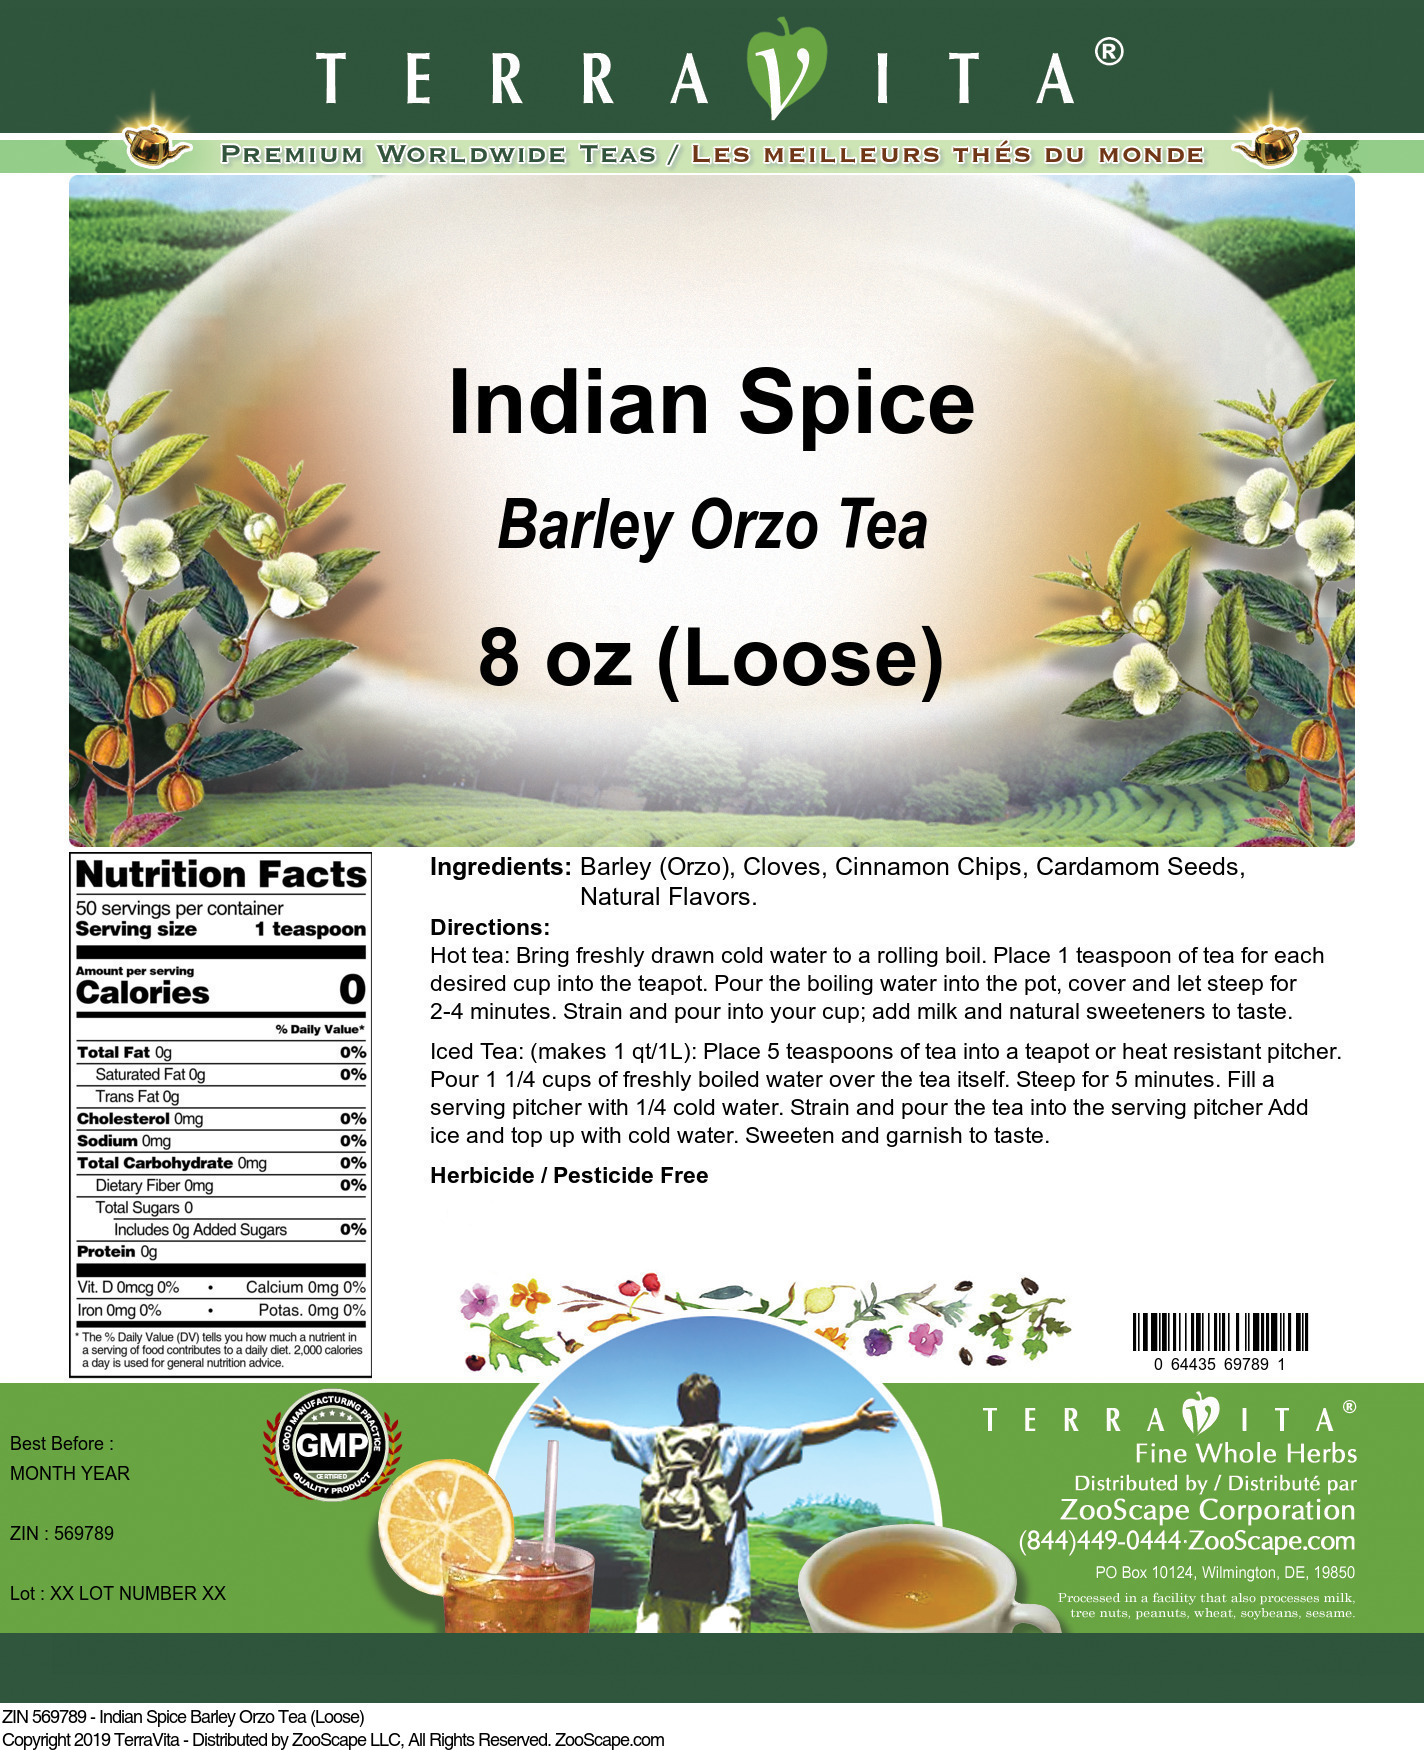 Indian Spice Barley Orzo Tea (Loose) - Label